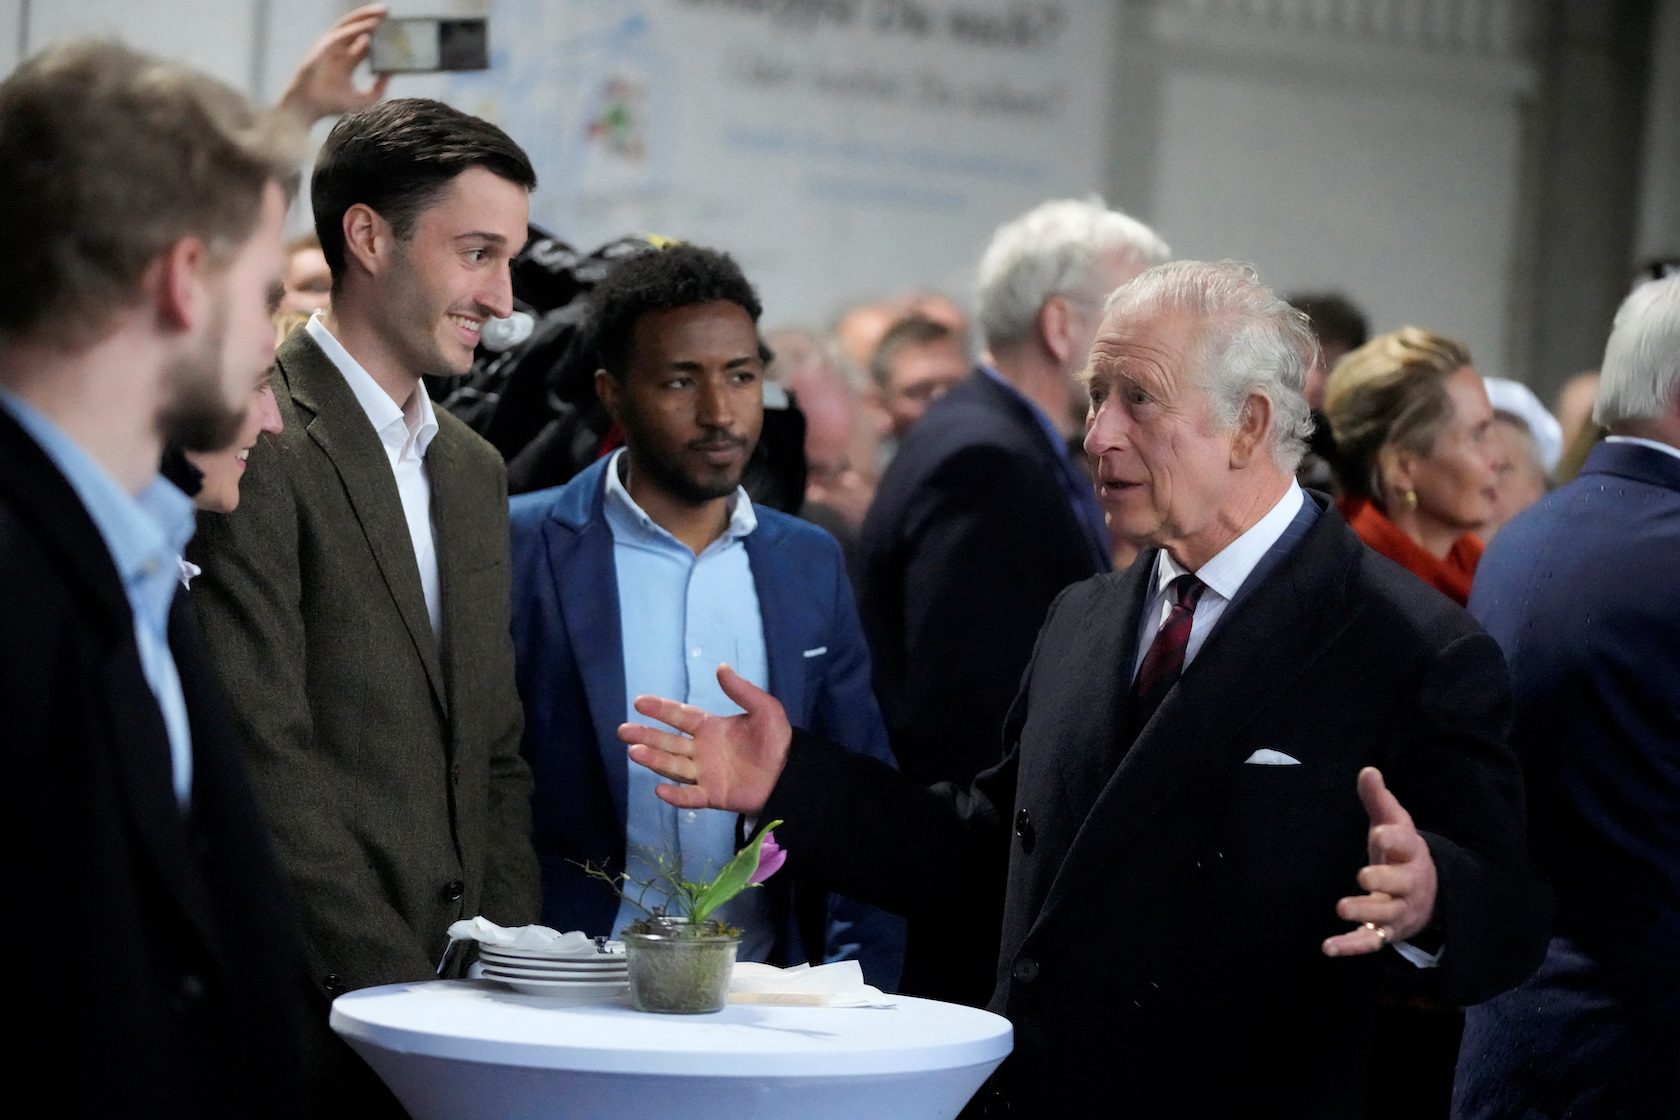 King Charles lauds unity on Ukraine war in bilingual Bundestag speech